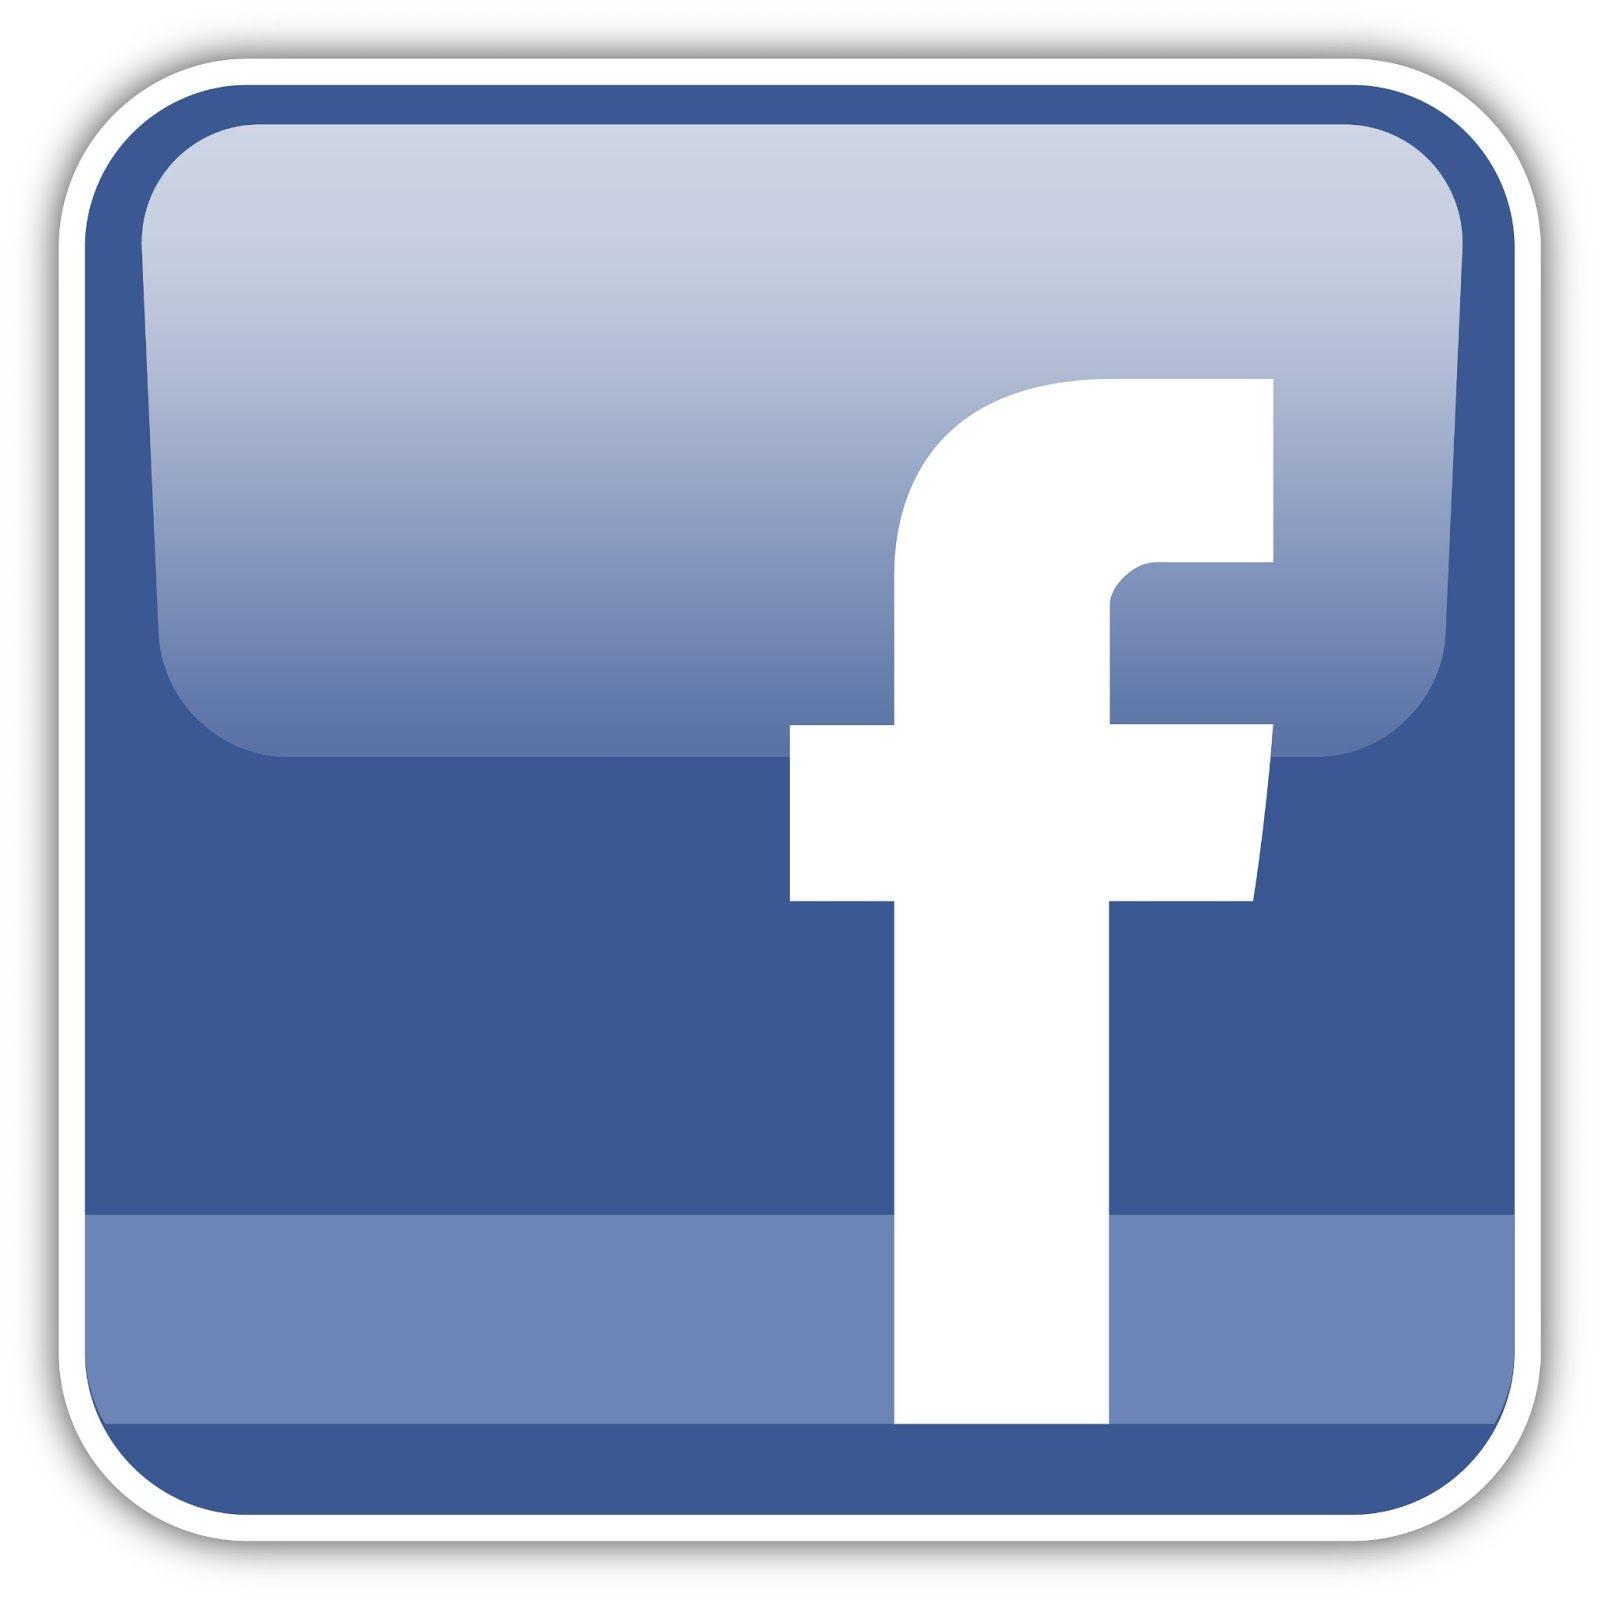 Facbeook Logo - Free Facebook Icon For Print 252850. Download Facebook Icon